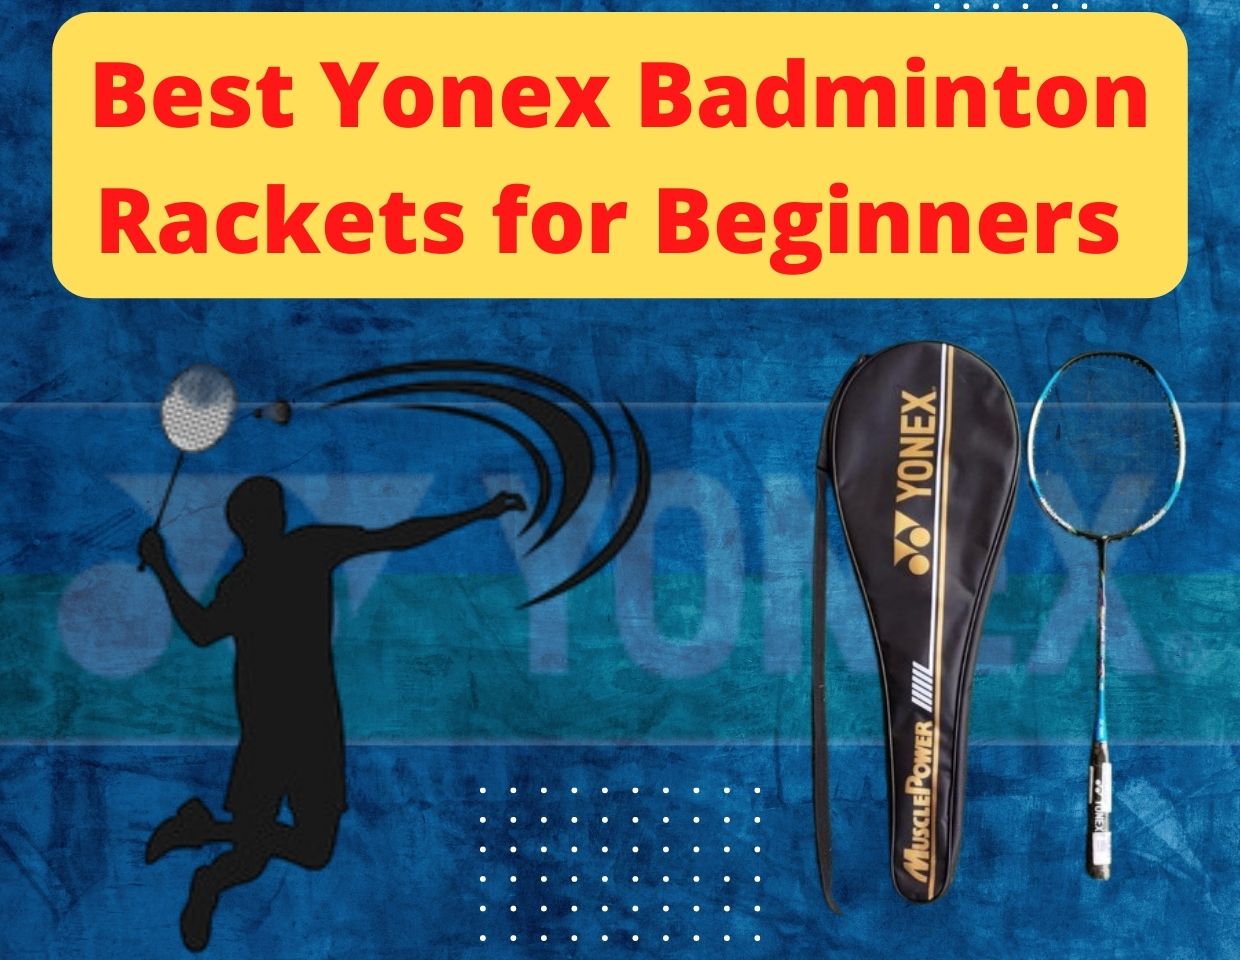 5 Best Yonex Badminton Rackets for Beginners [Reviews]